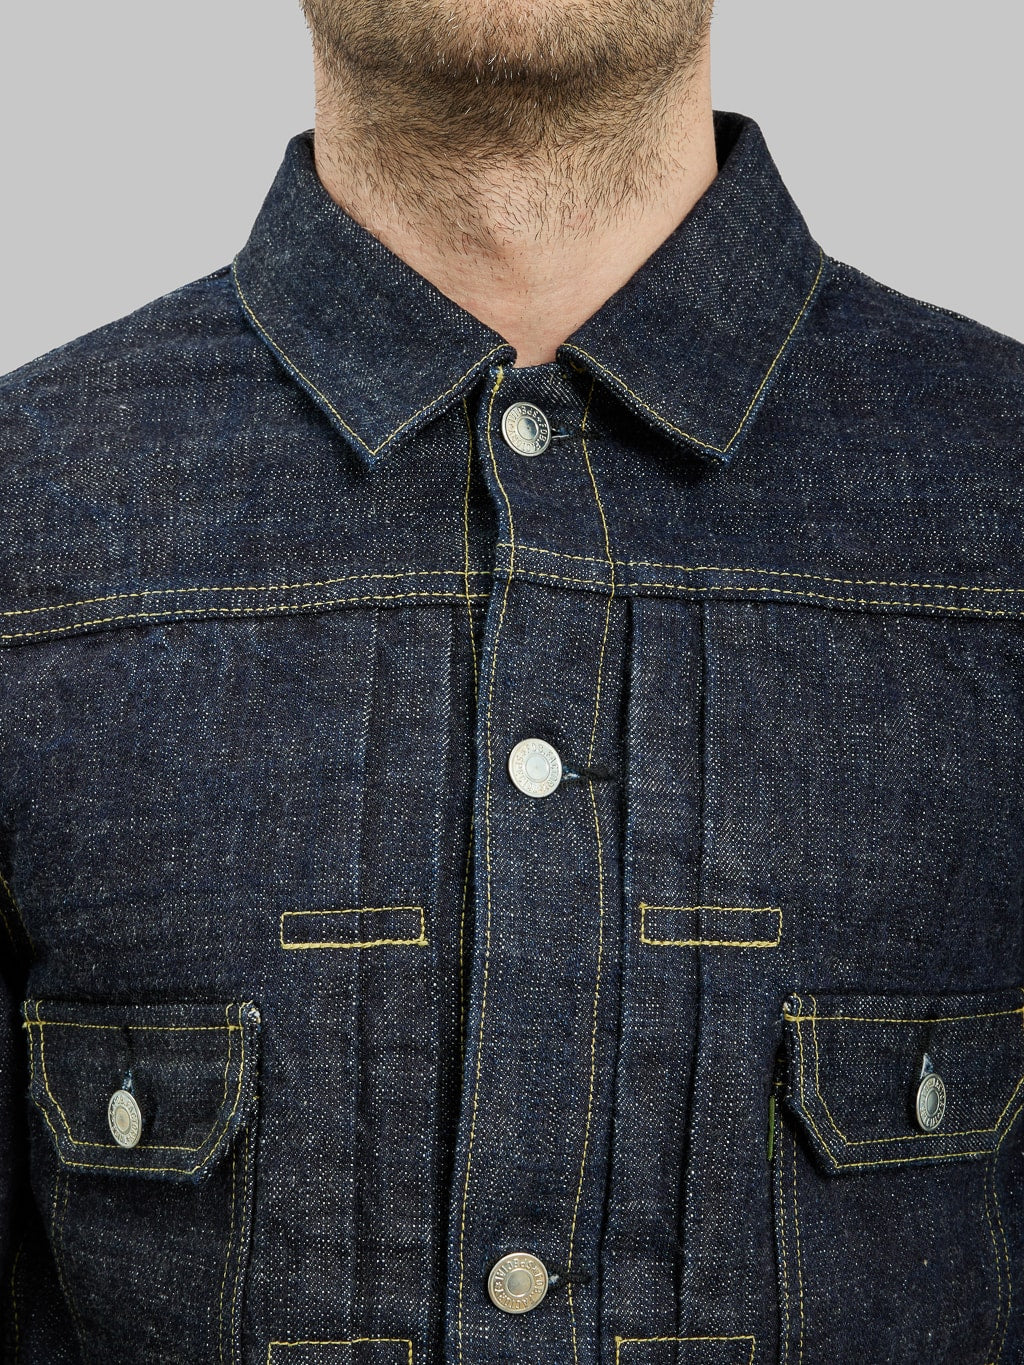 Fob factory Type III denim jacket chest pocket details